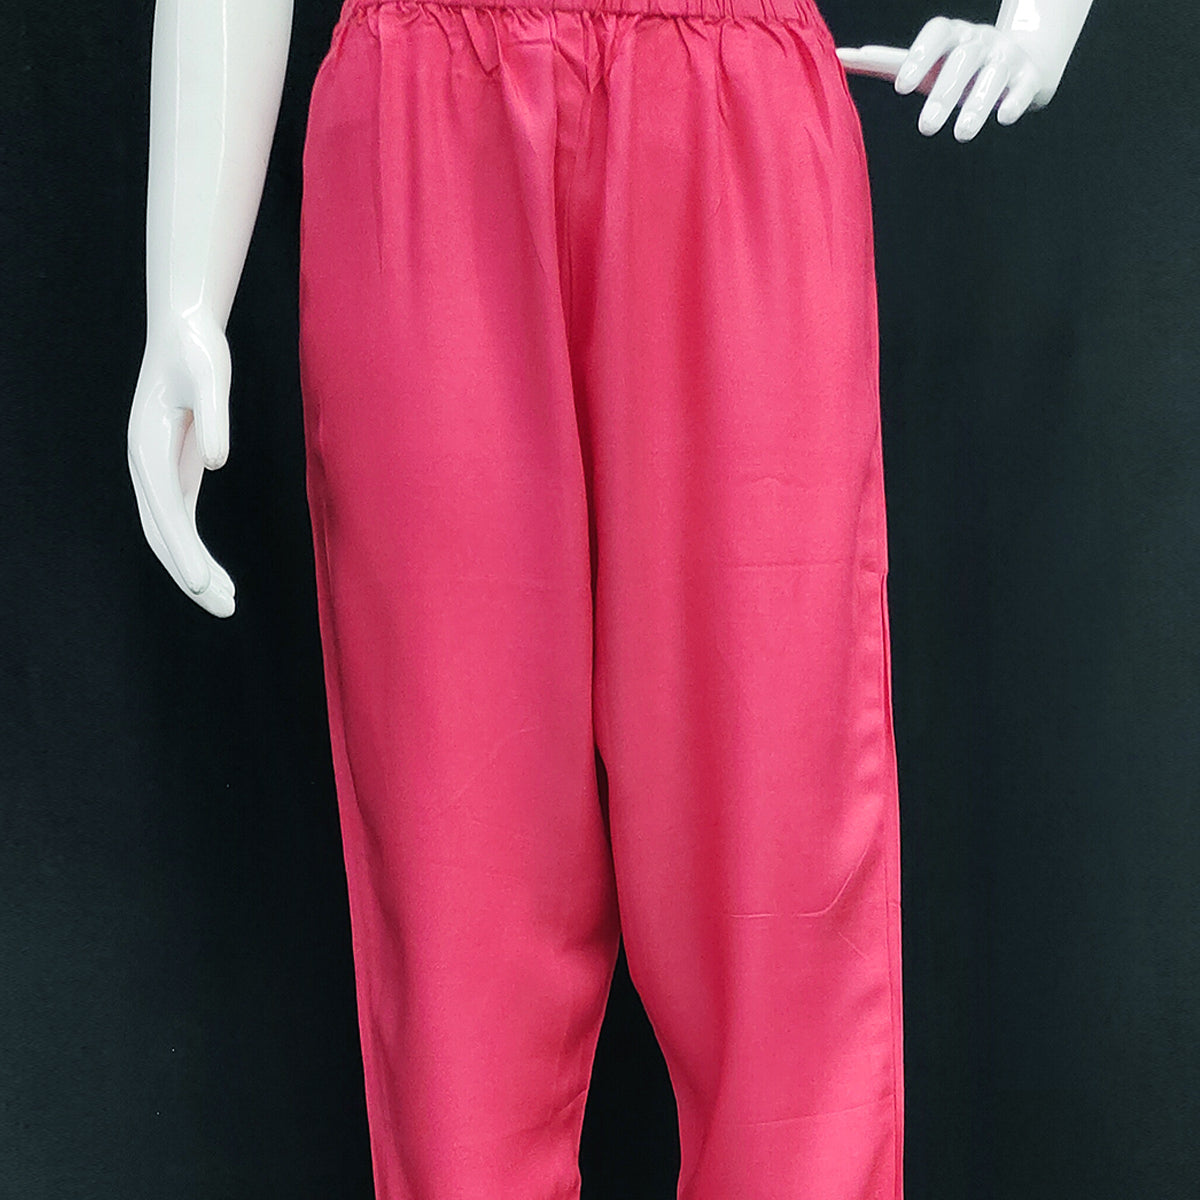 Gajri Pink Printed Rayon Pant